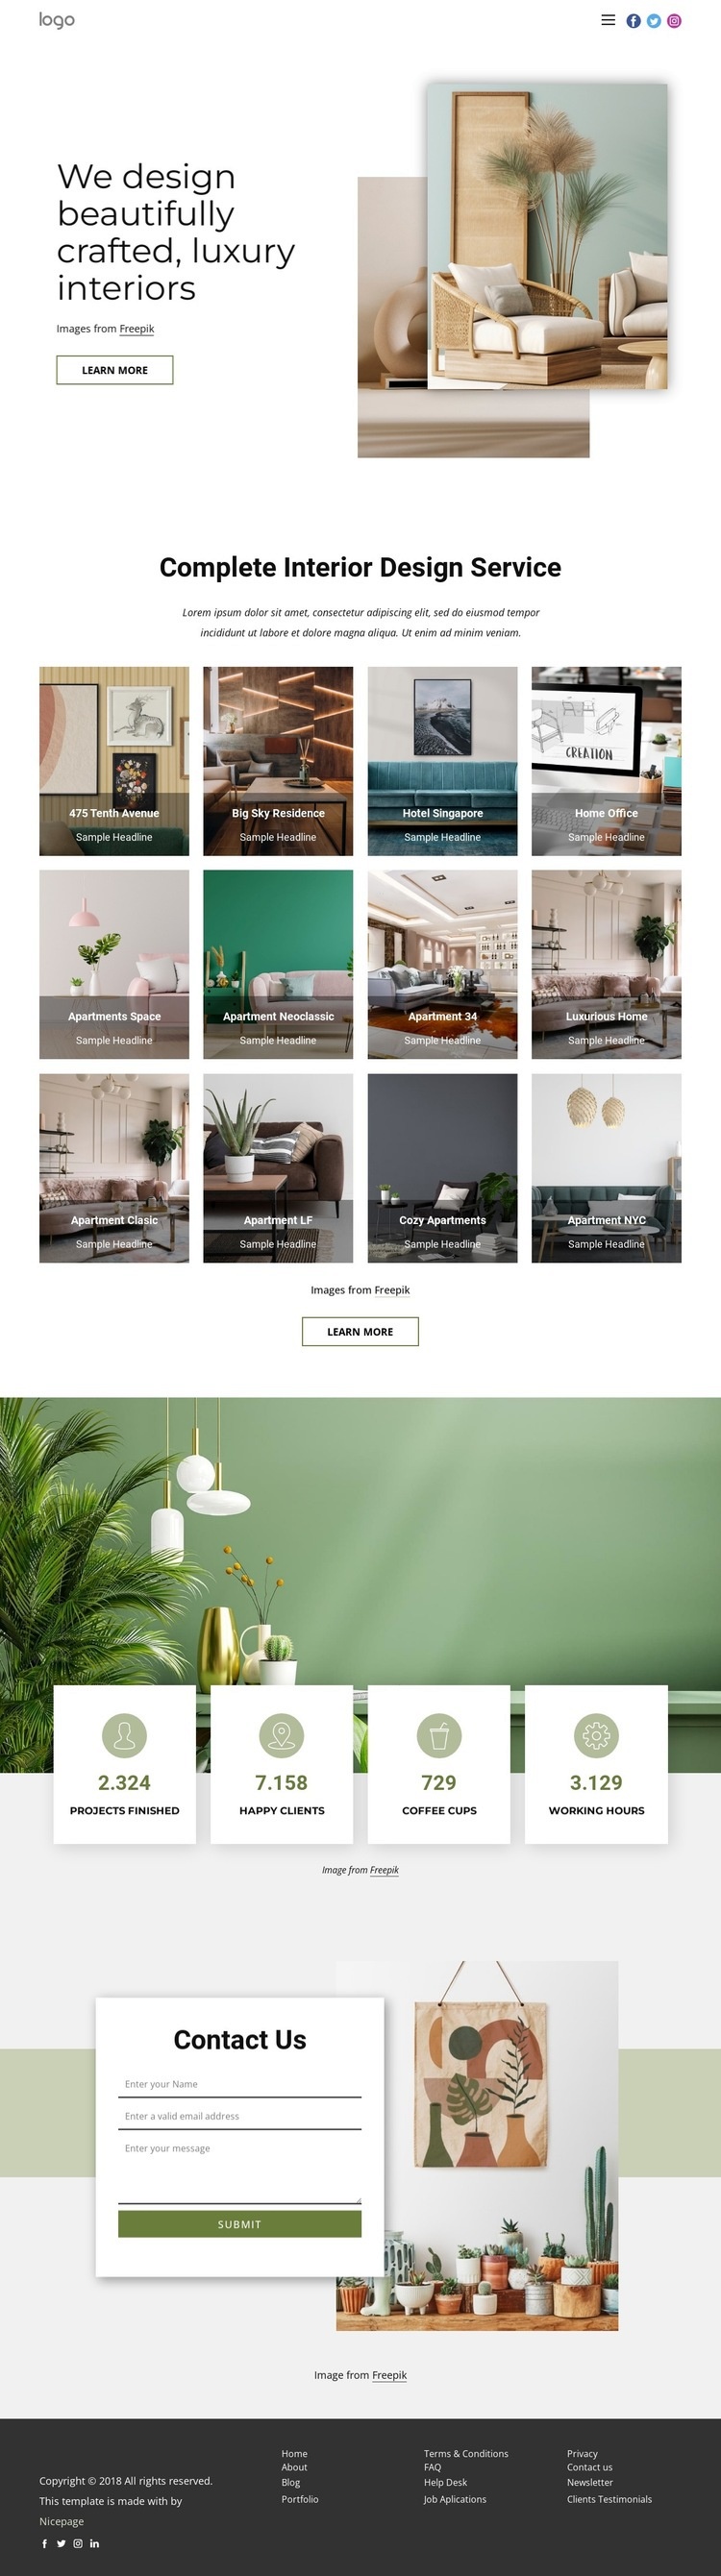 We design luxury interiors Homepage Design